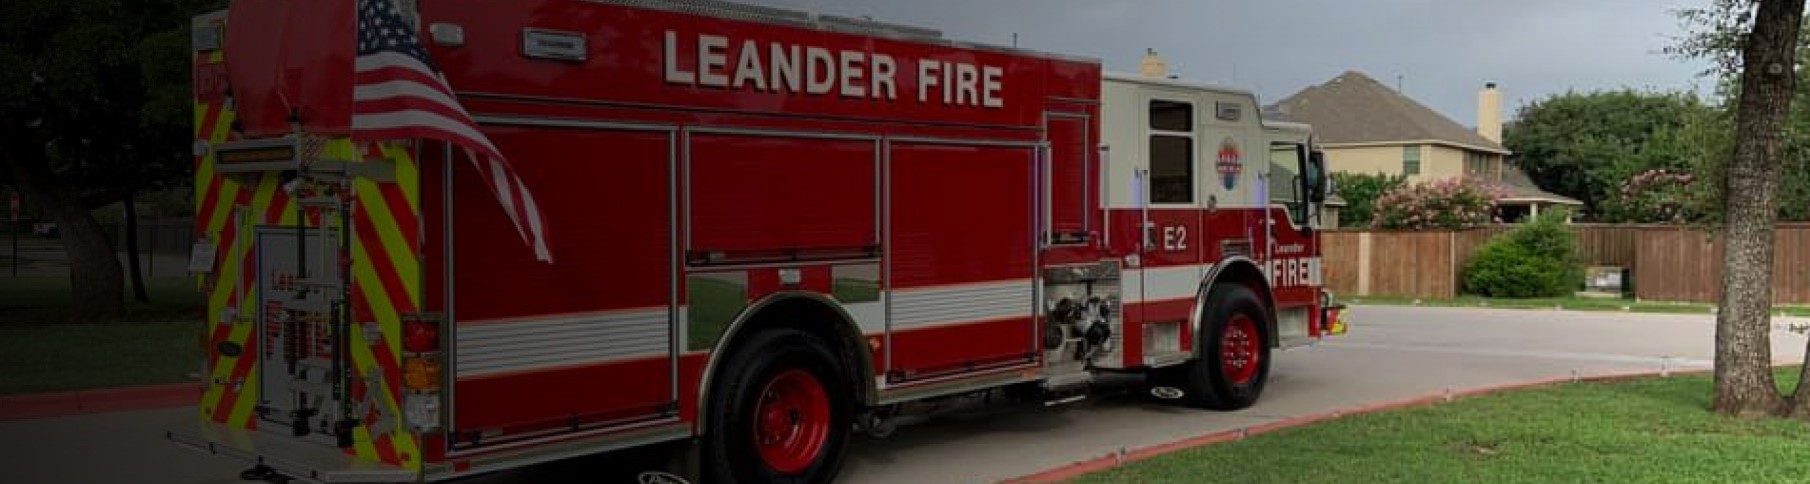 firefighter sues leander healthnut